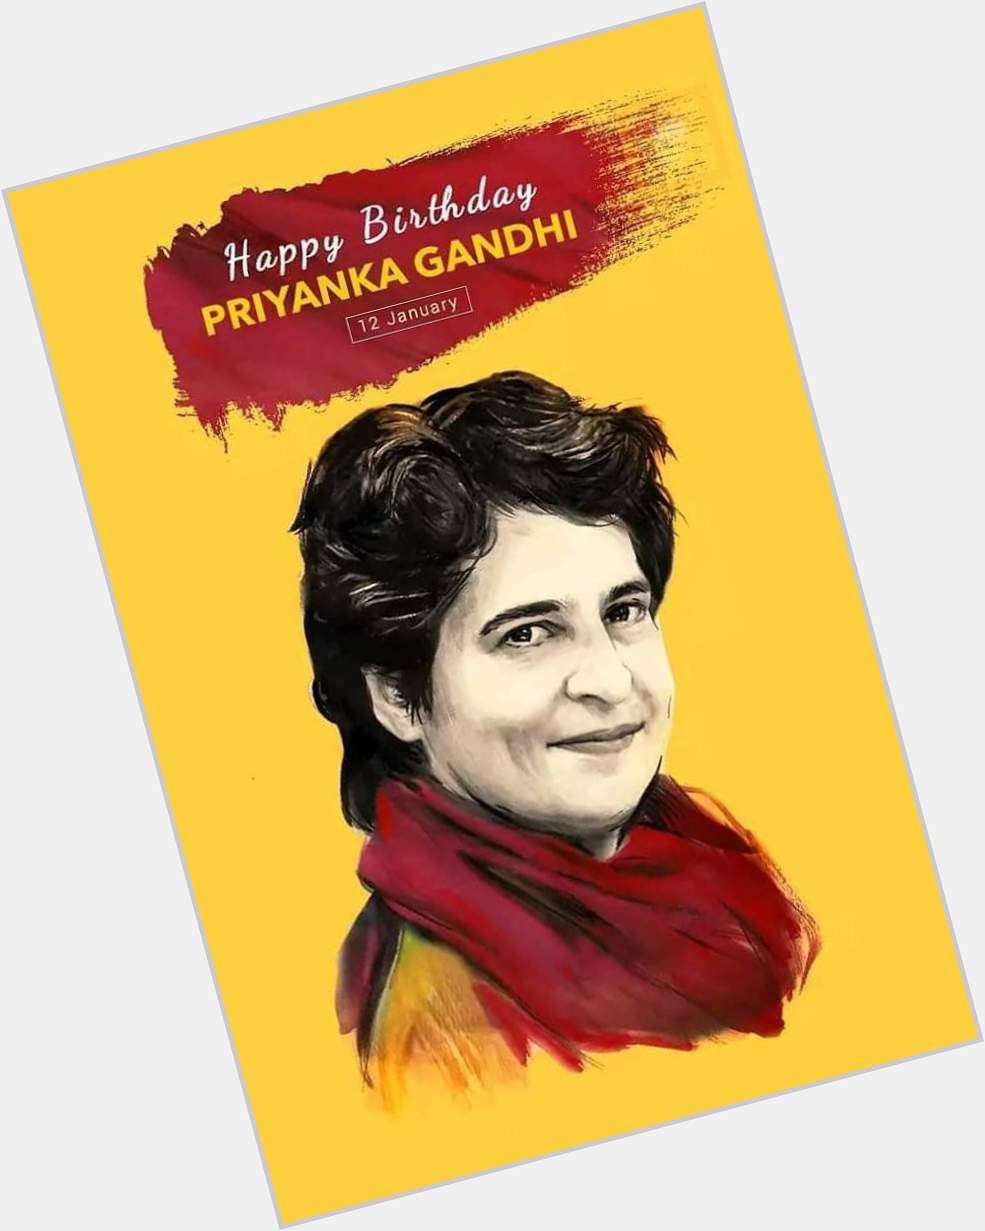 Dynamic Leader Priyanka Gandhi ji 
Wish you very very very Happy Birthday.. 